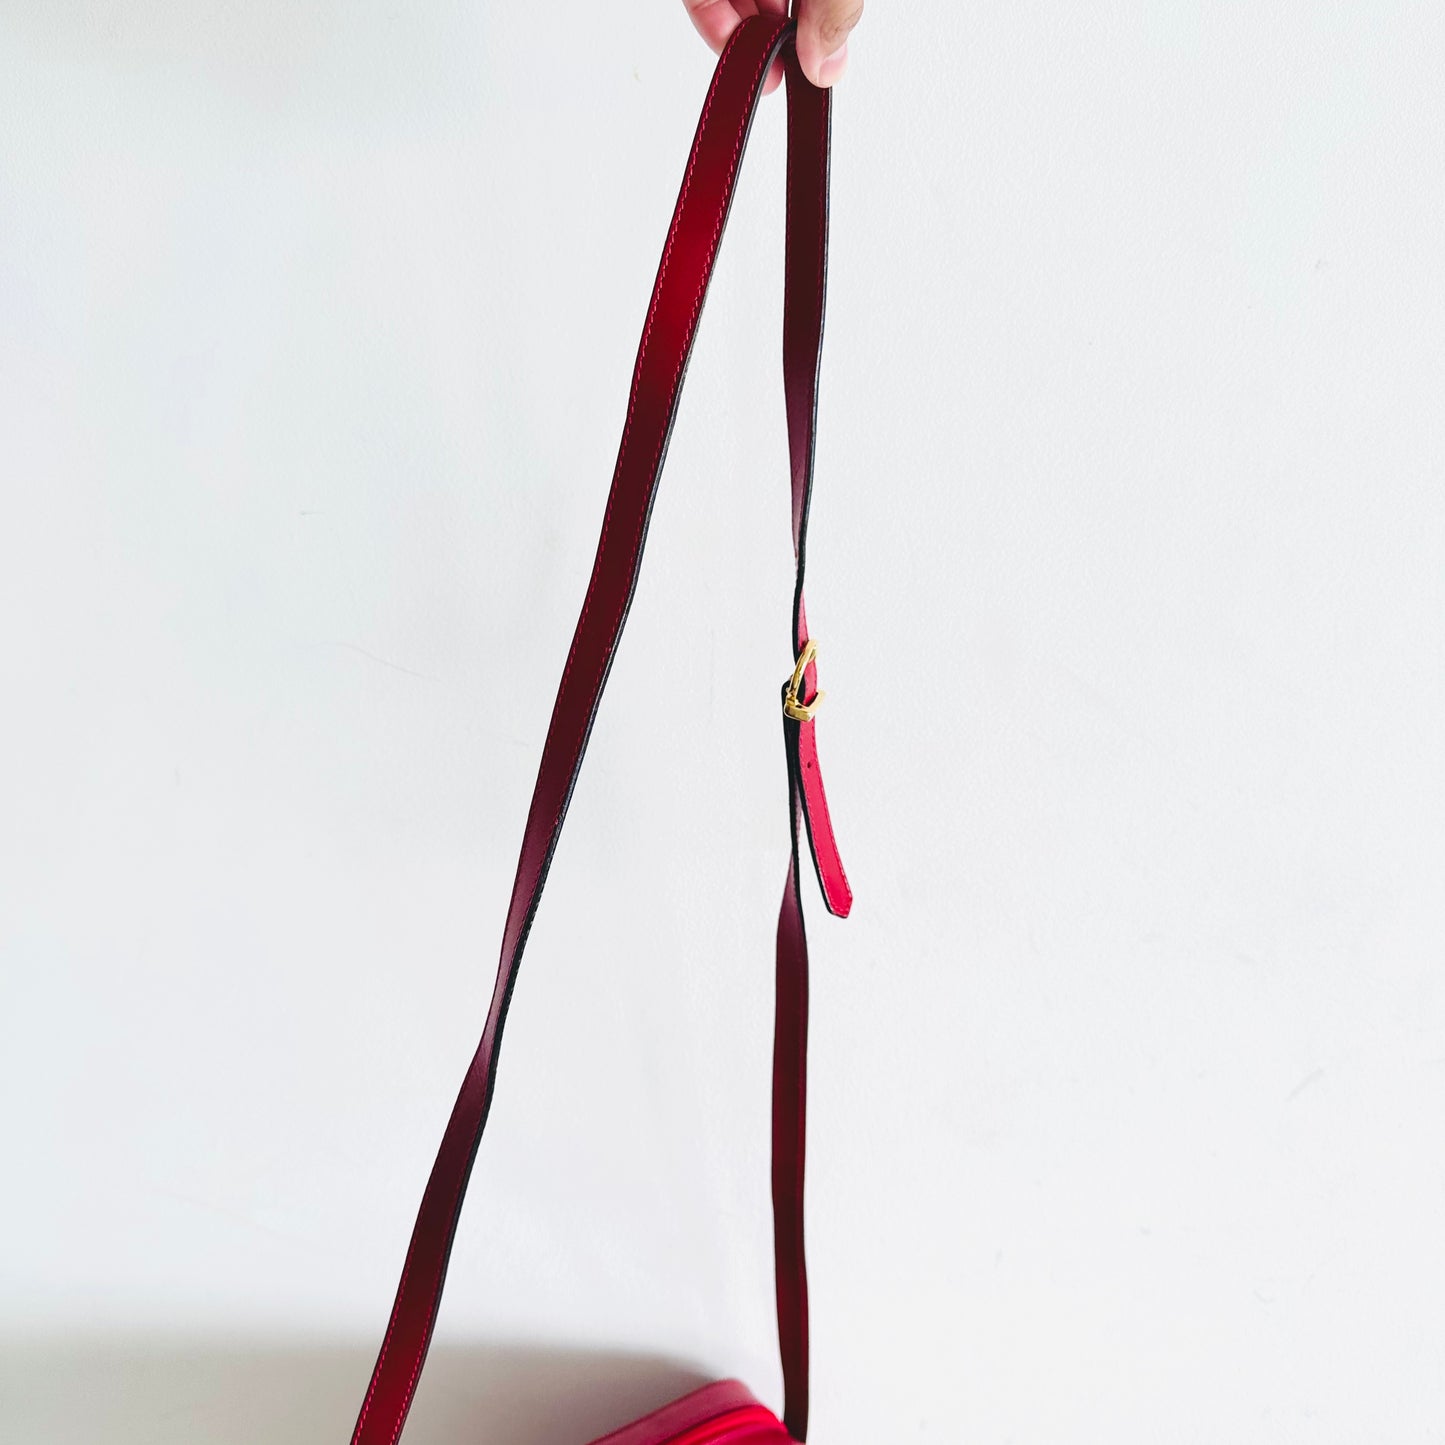 Salvatore Ferragamo Vara Bow Deep Red GHW Logo Smooth Leather Camera Shoulder Sling Bag